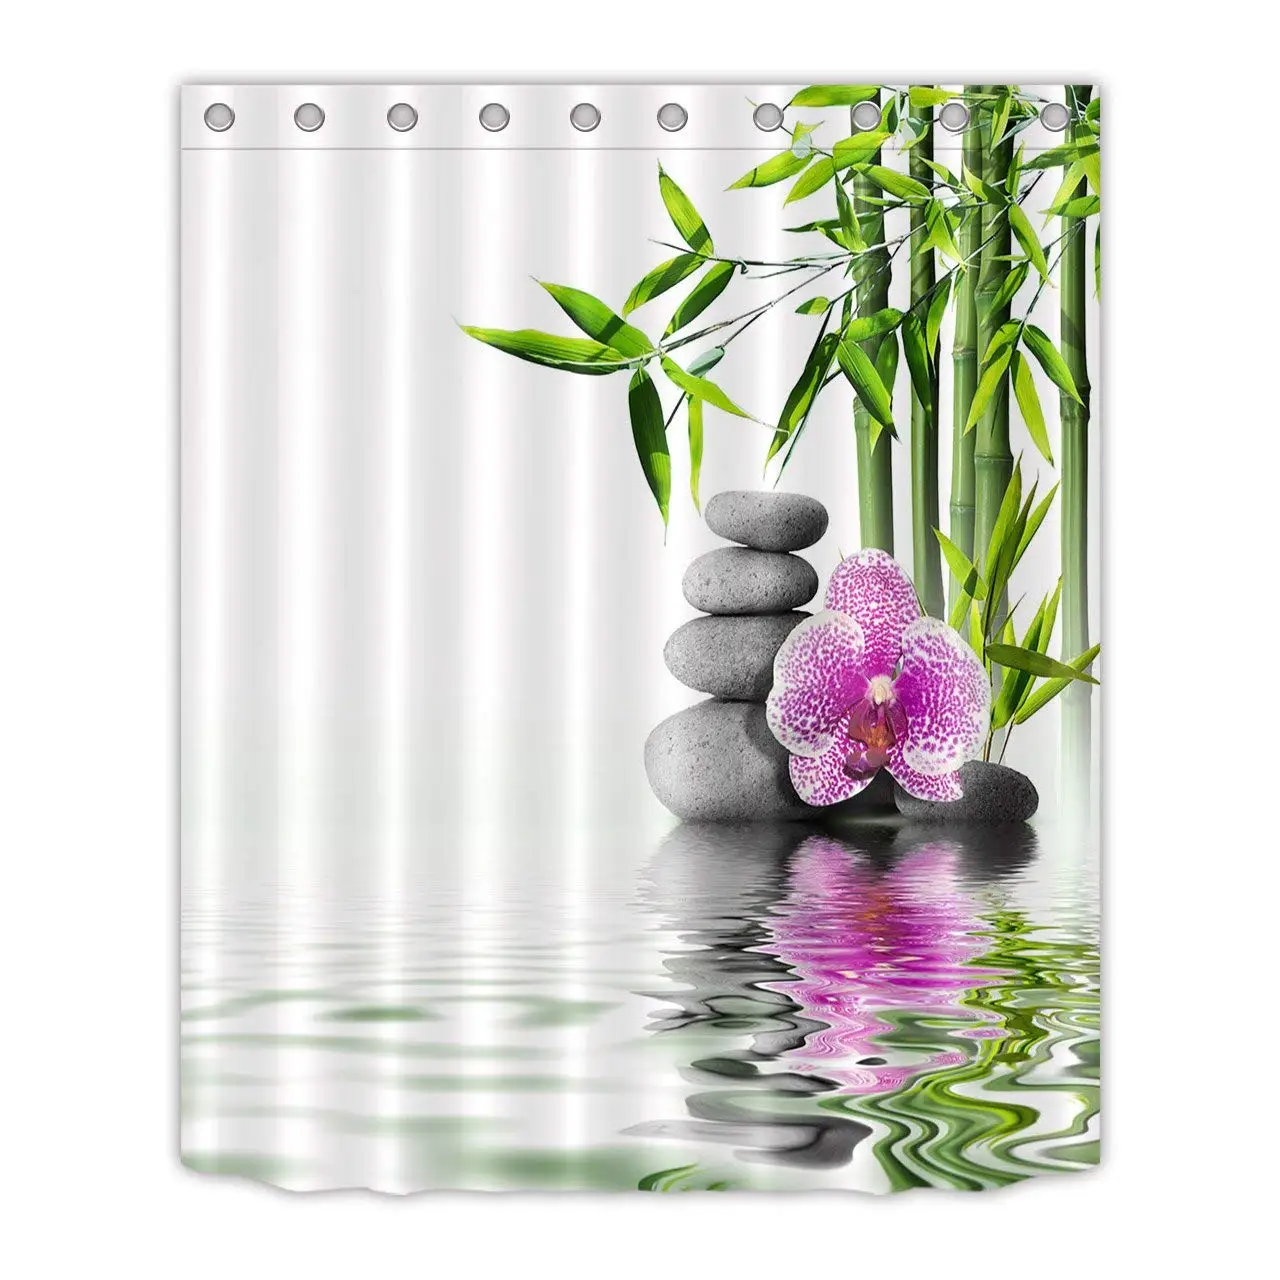 

Spa Zen Buddha Water Yoga Shower Curtain Green Bamboo Flower Polyester Fabric Waterproof Massage Stone Orchid Bathroom Curtains